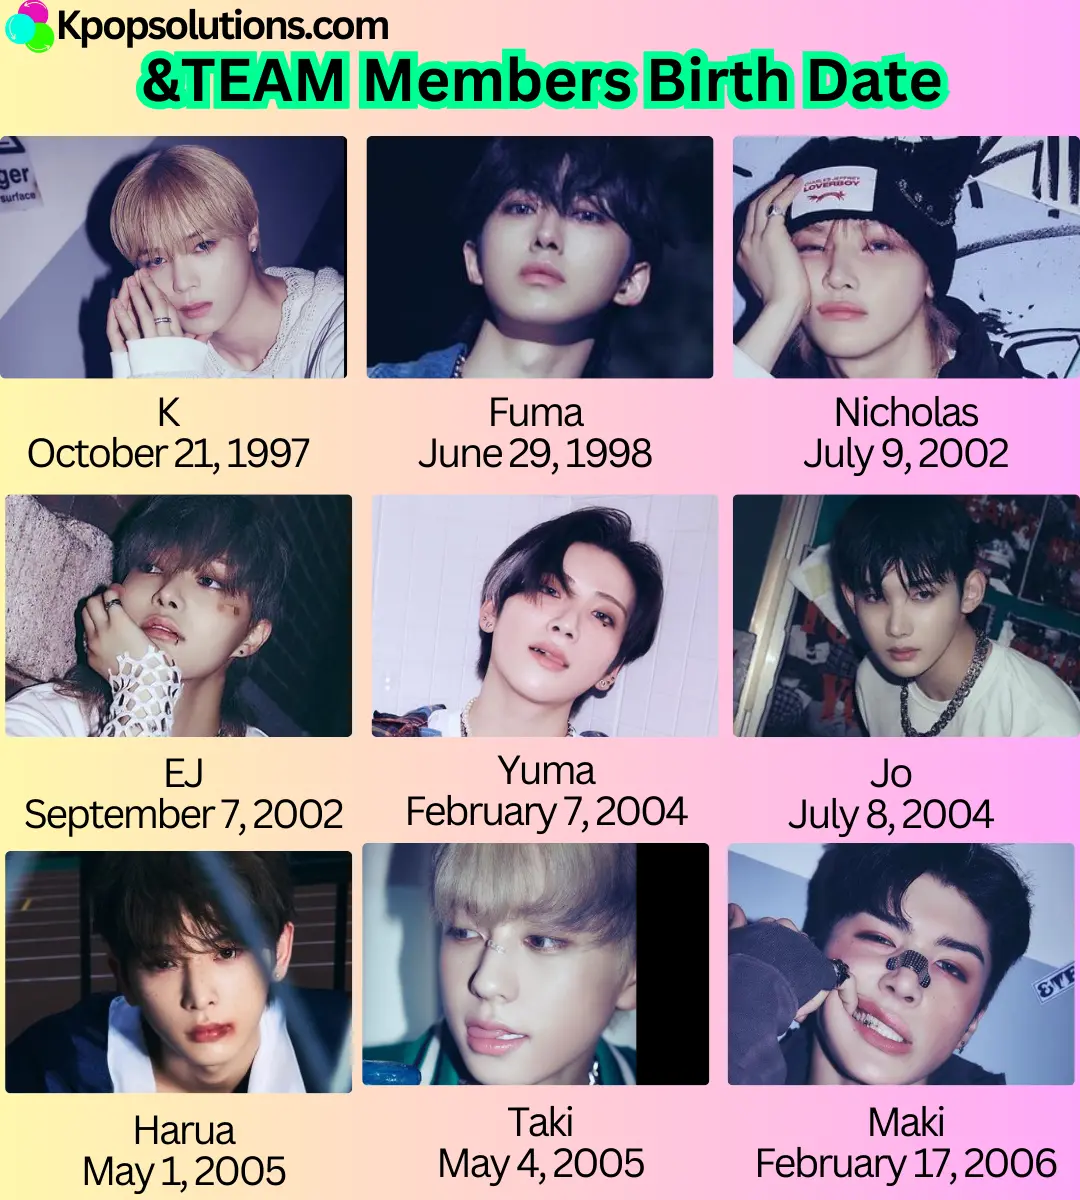 &Team members date of birth and current age in order: K, Fuma, Nicholas, EJ, Yuma, Jo, Harua, Taki, and Maki